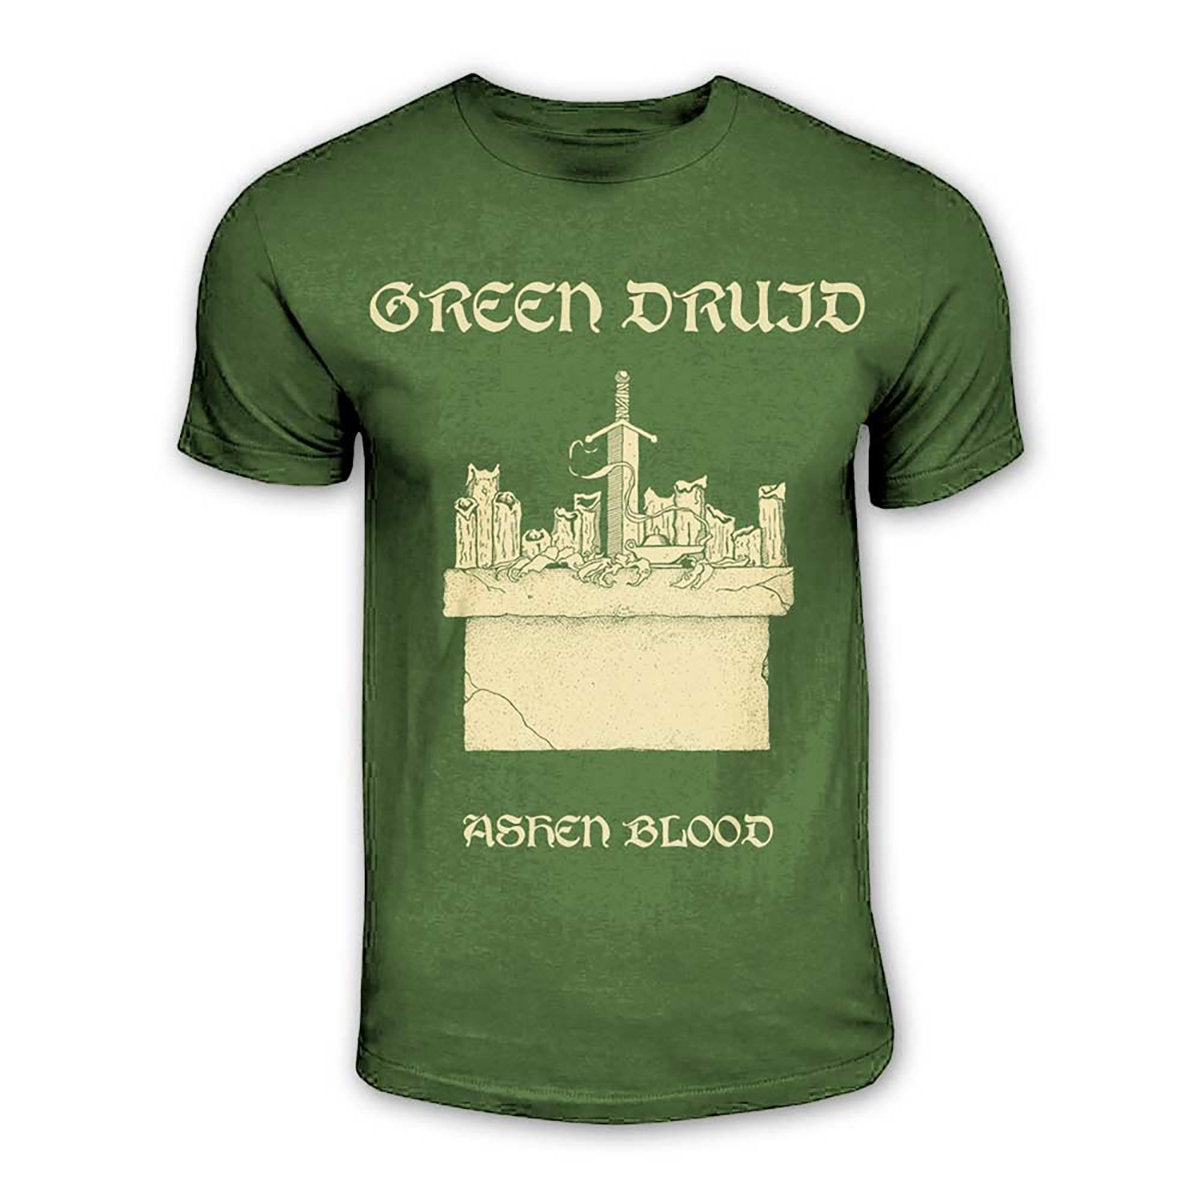 Green Druid "Ashen Blood" Green or Black T shirt